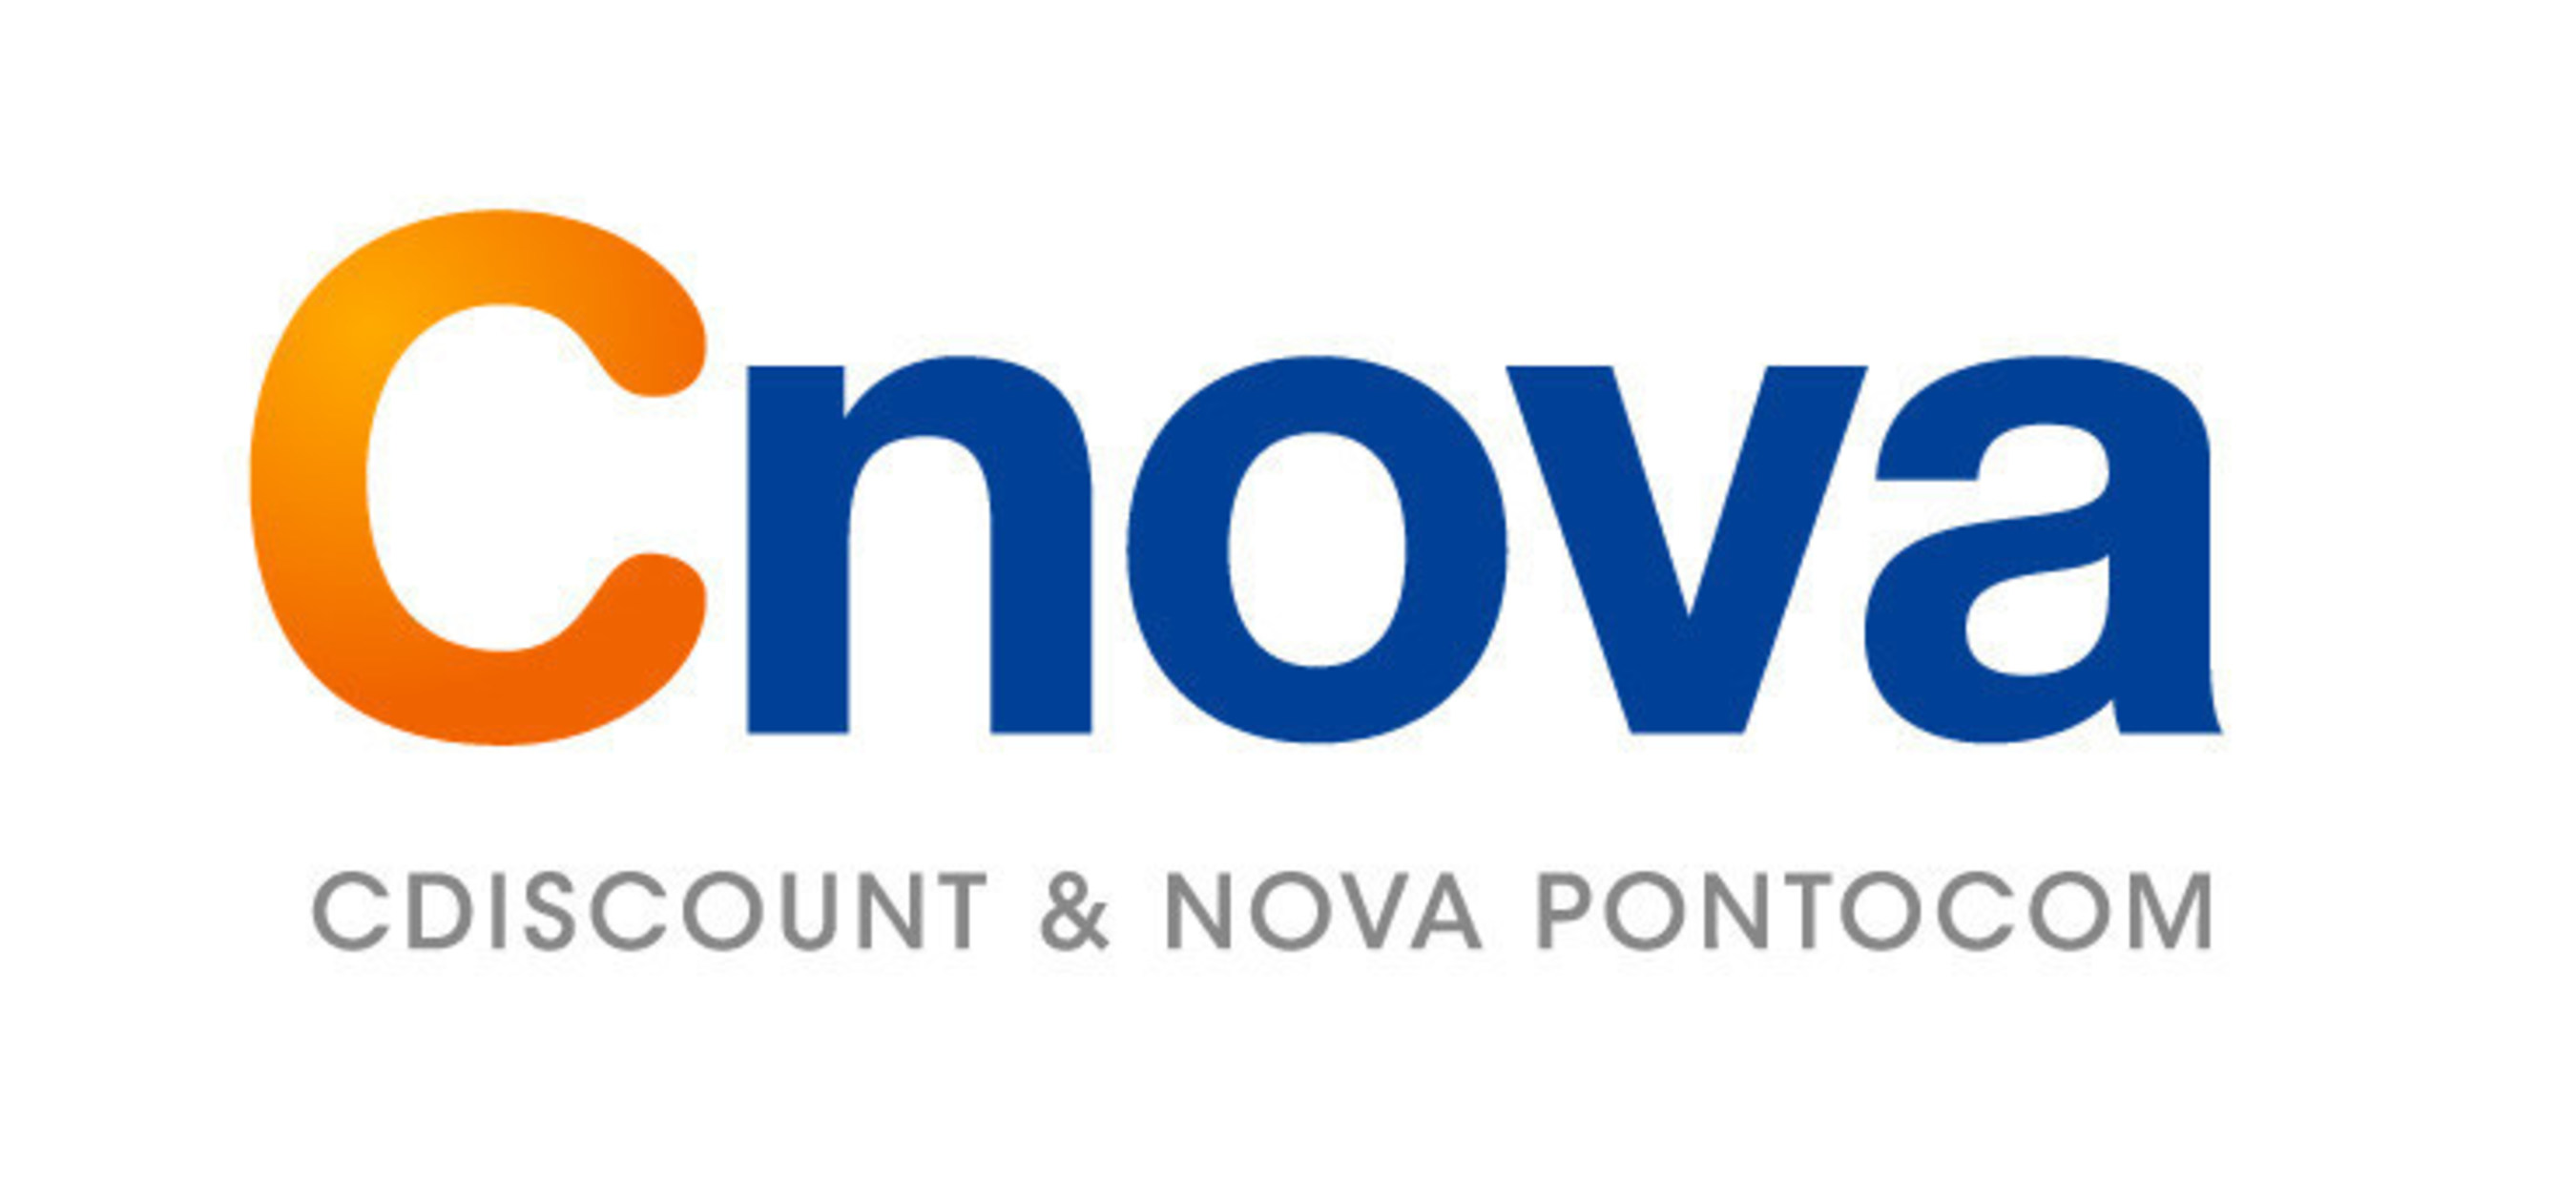 Cnova logo